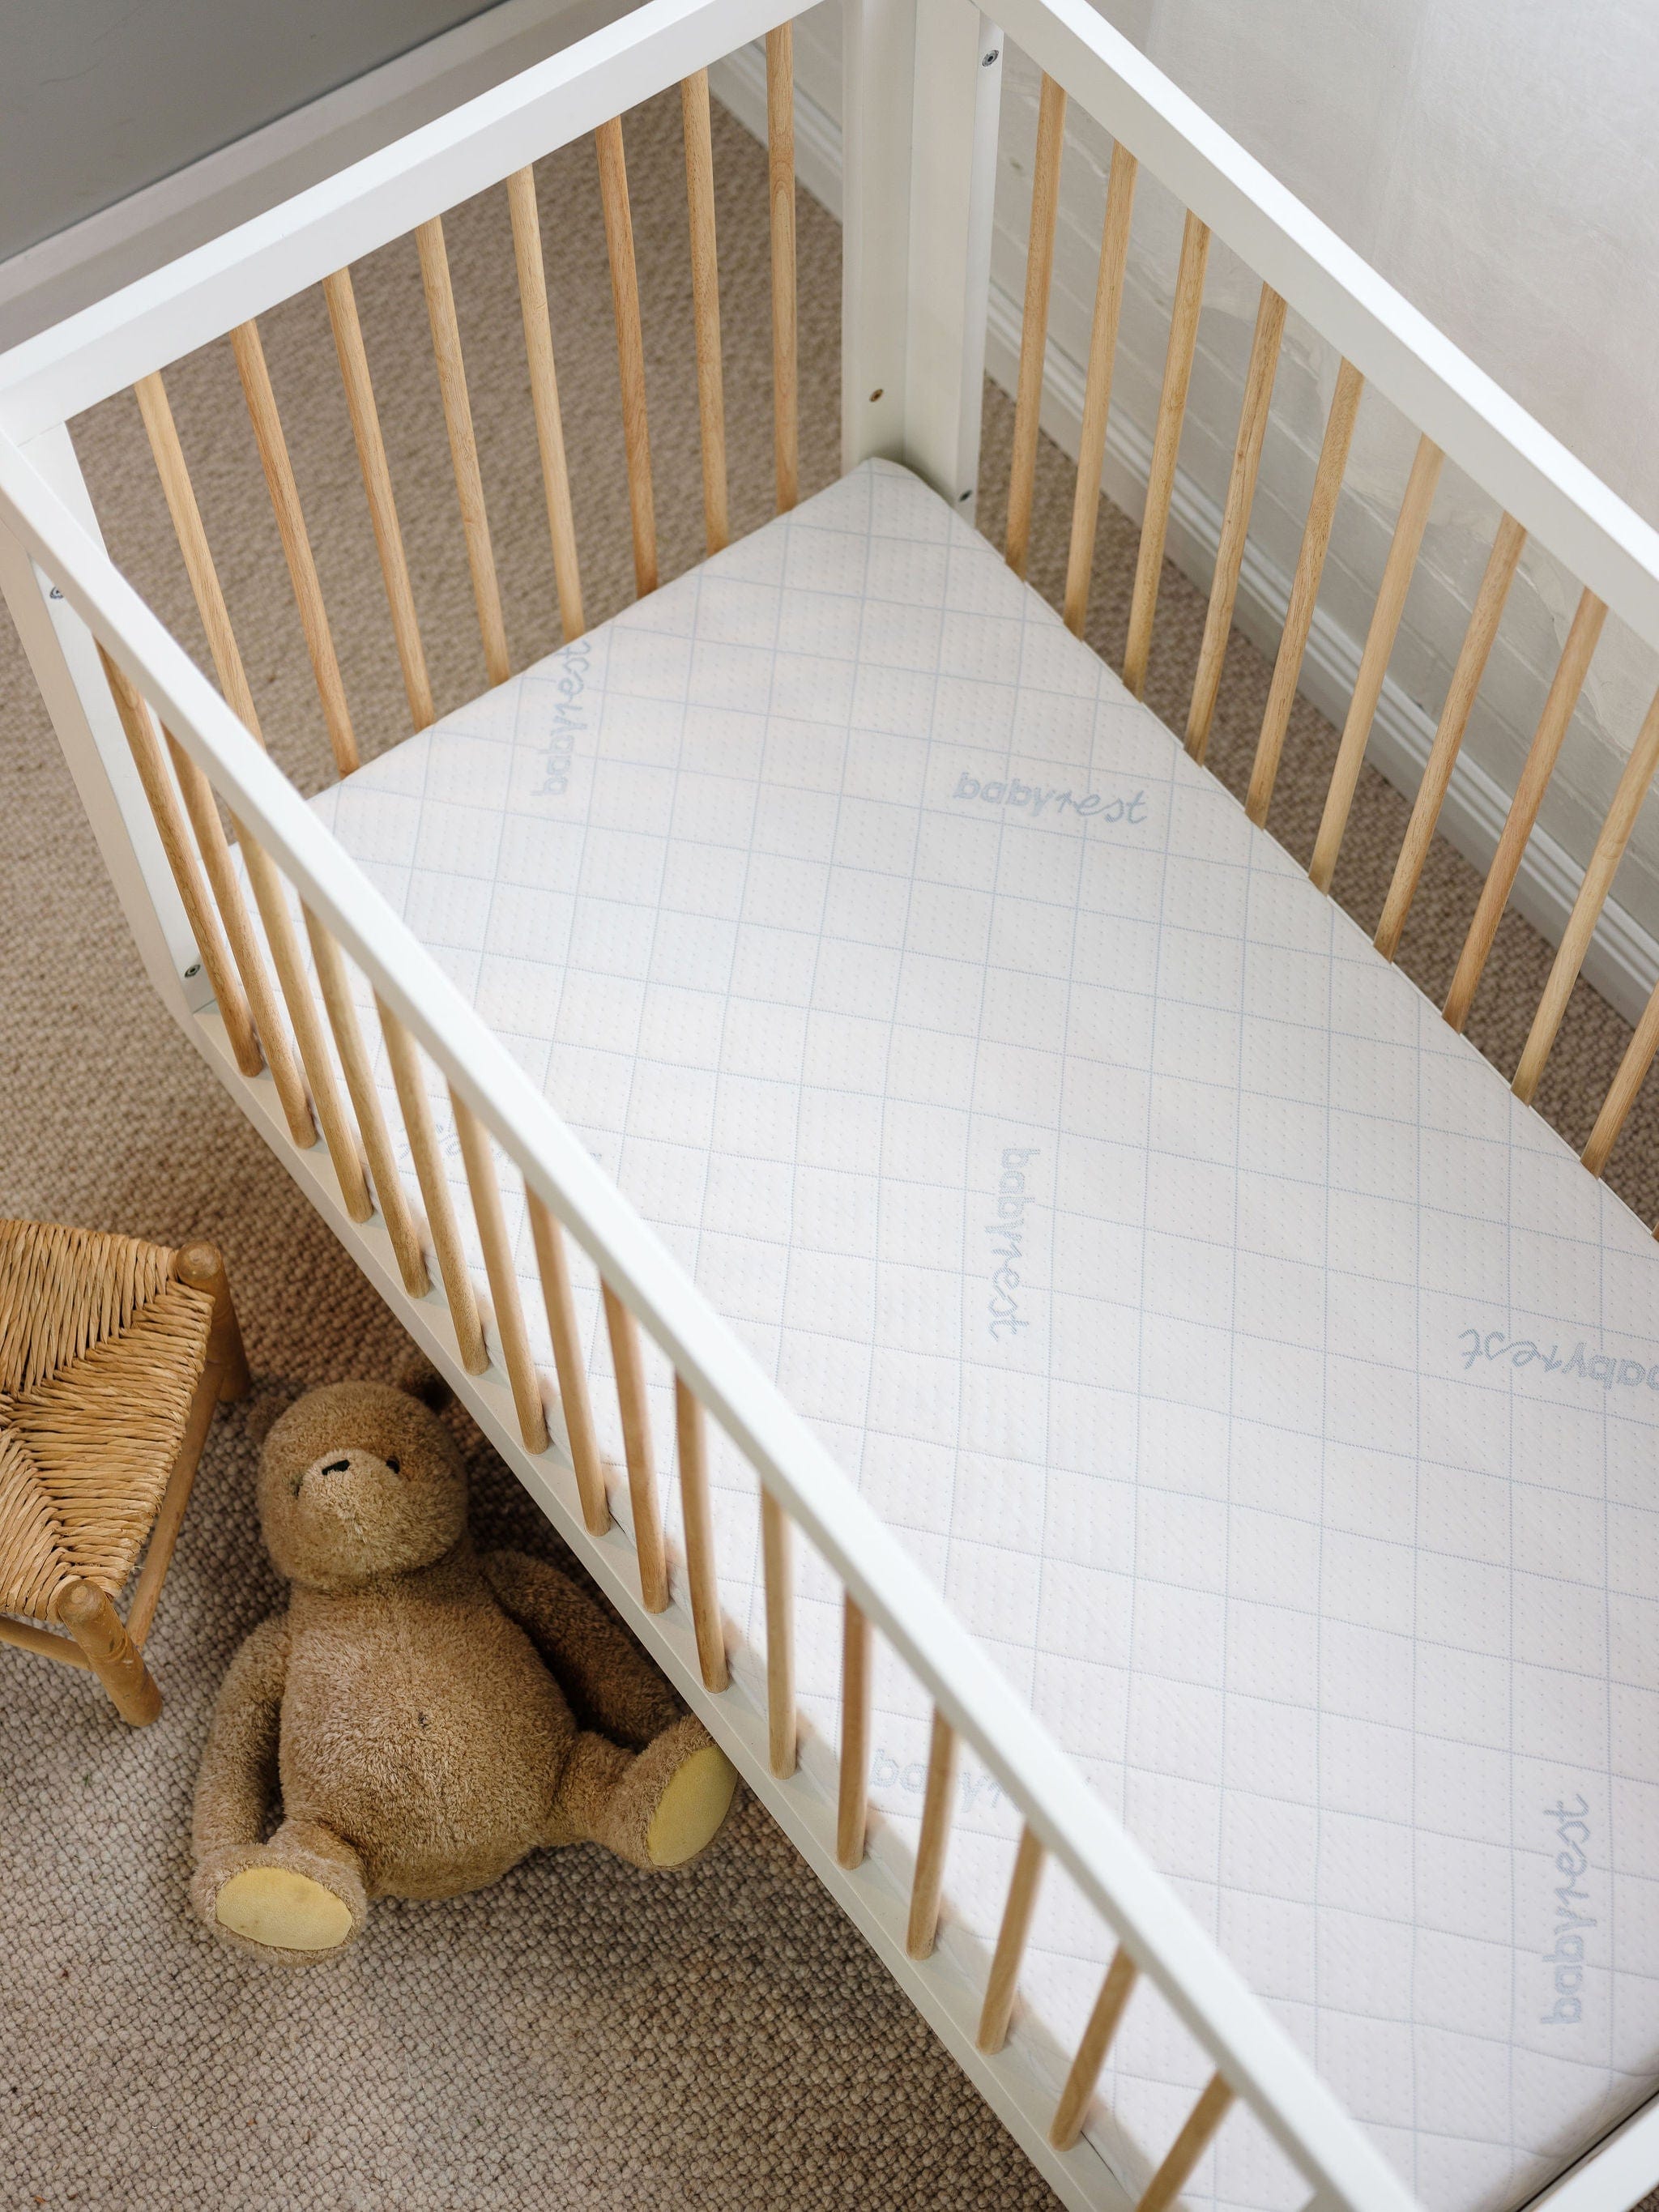 Babyrest Furniture Nursery ComfiCore Cot Mattress in a Box